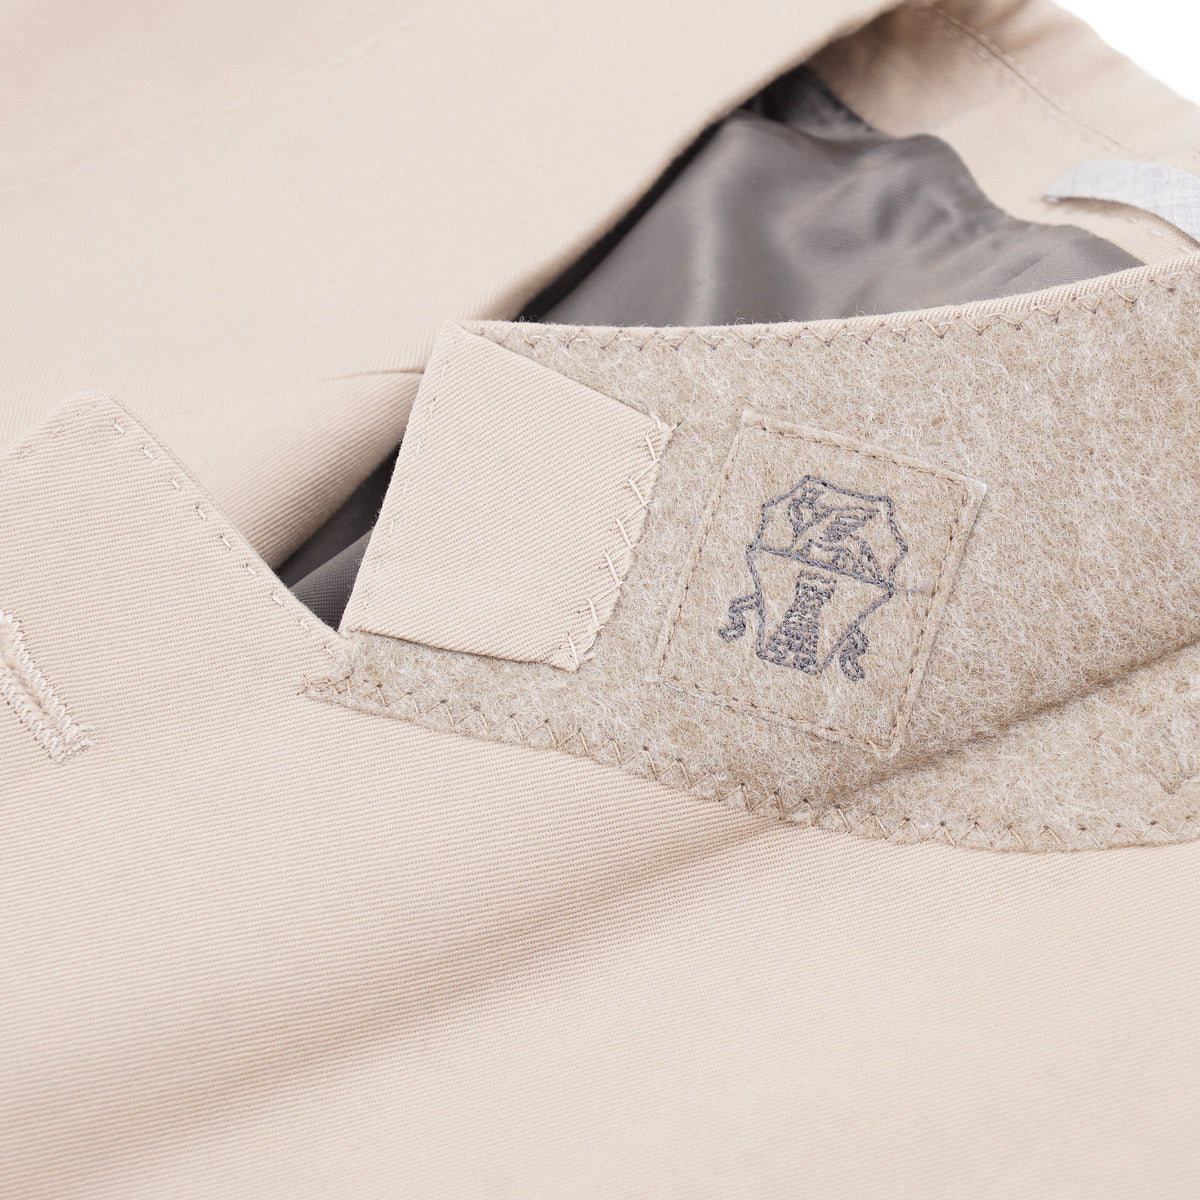 Brunello Cucinelli Wool and Cotton Suit - Top Shelf Apparel